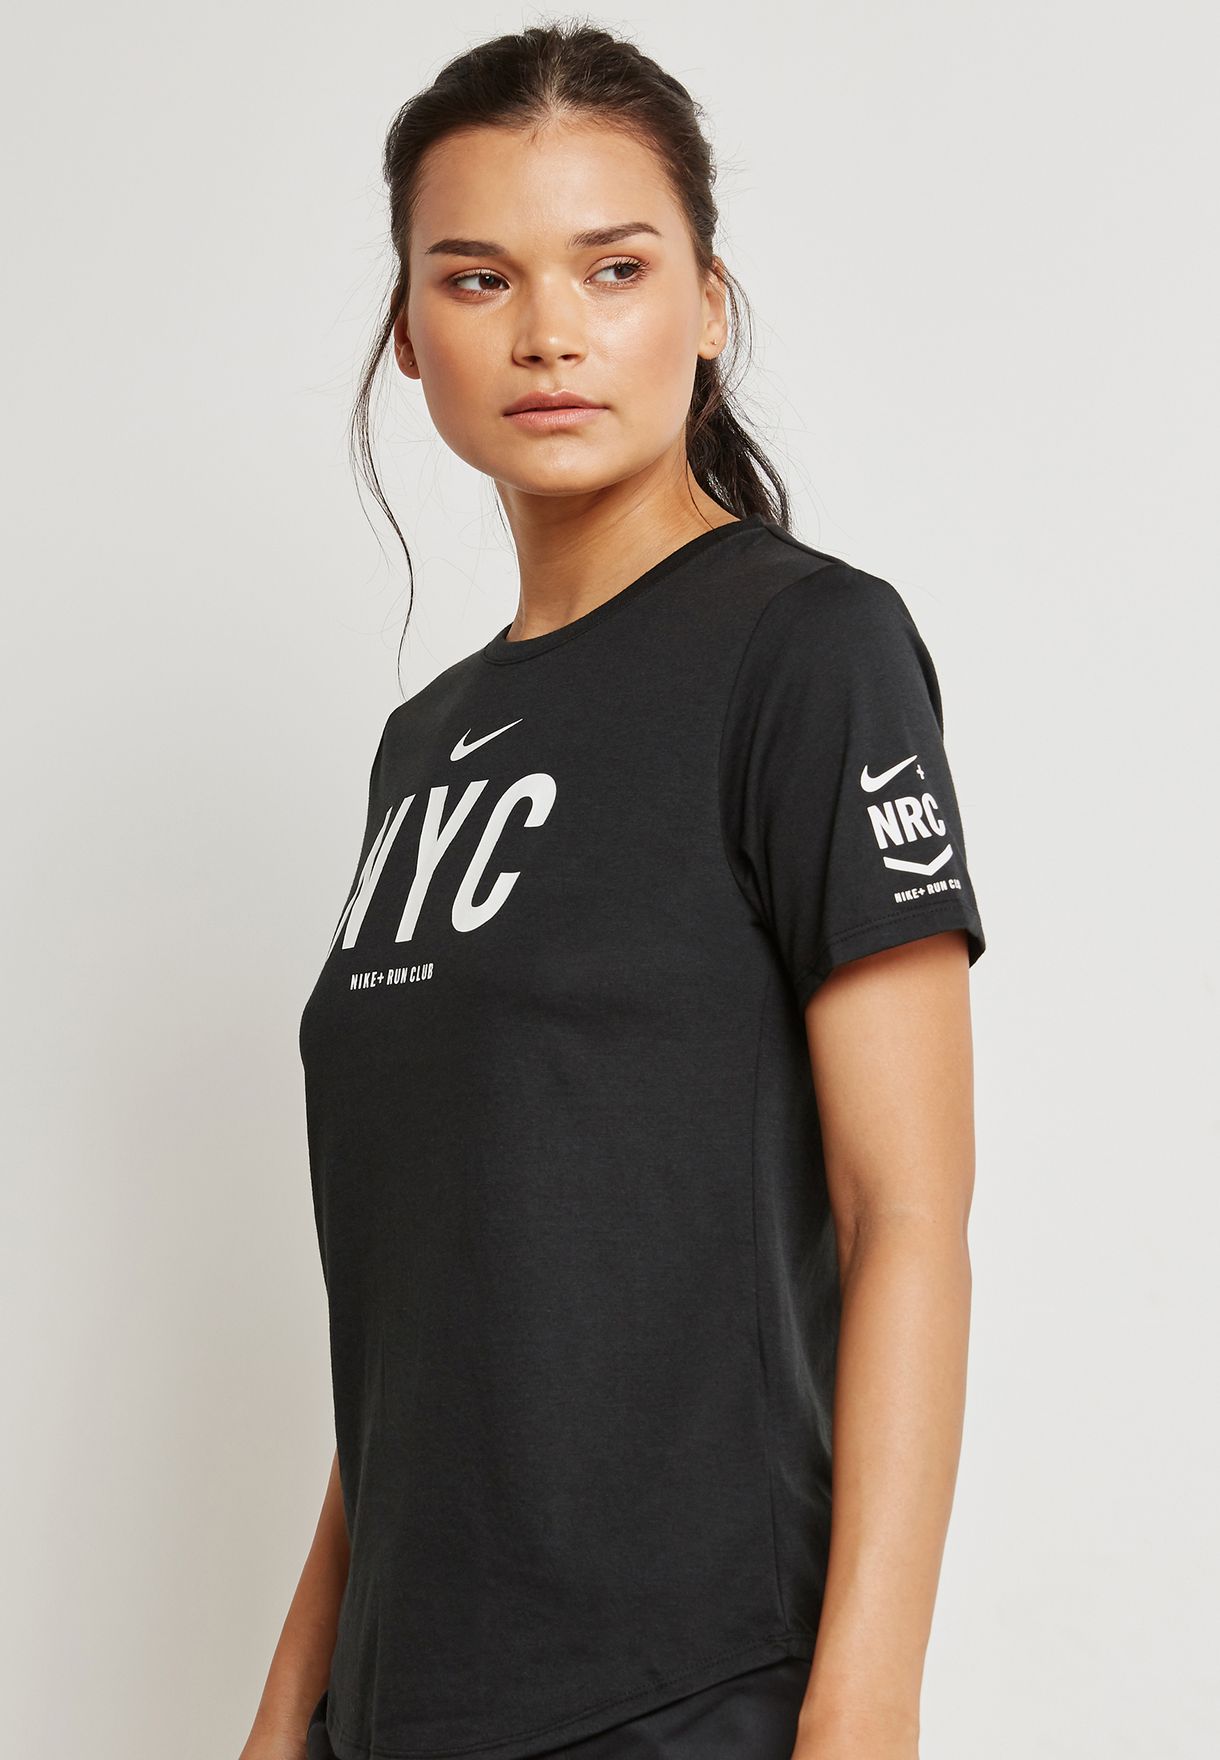 fácil de lastimarse falta de aliento Trascendencia Buy Nike black Dri-FIT NYC Run Club T-Shirt for Women in Dubai, Abu Dhabi